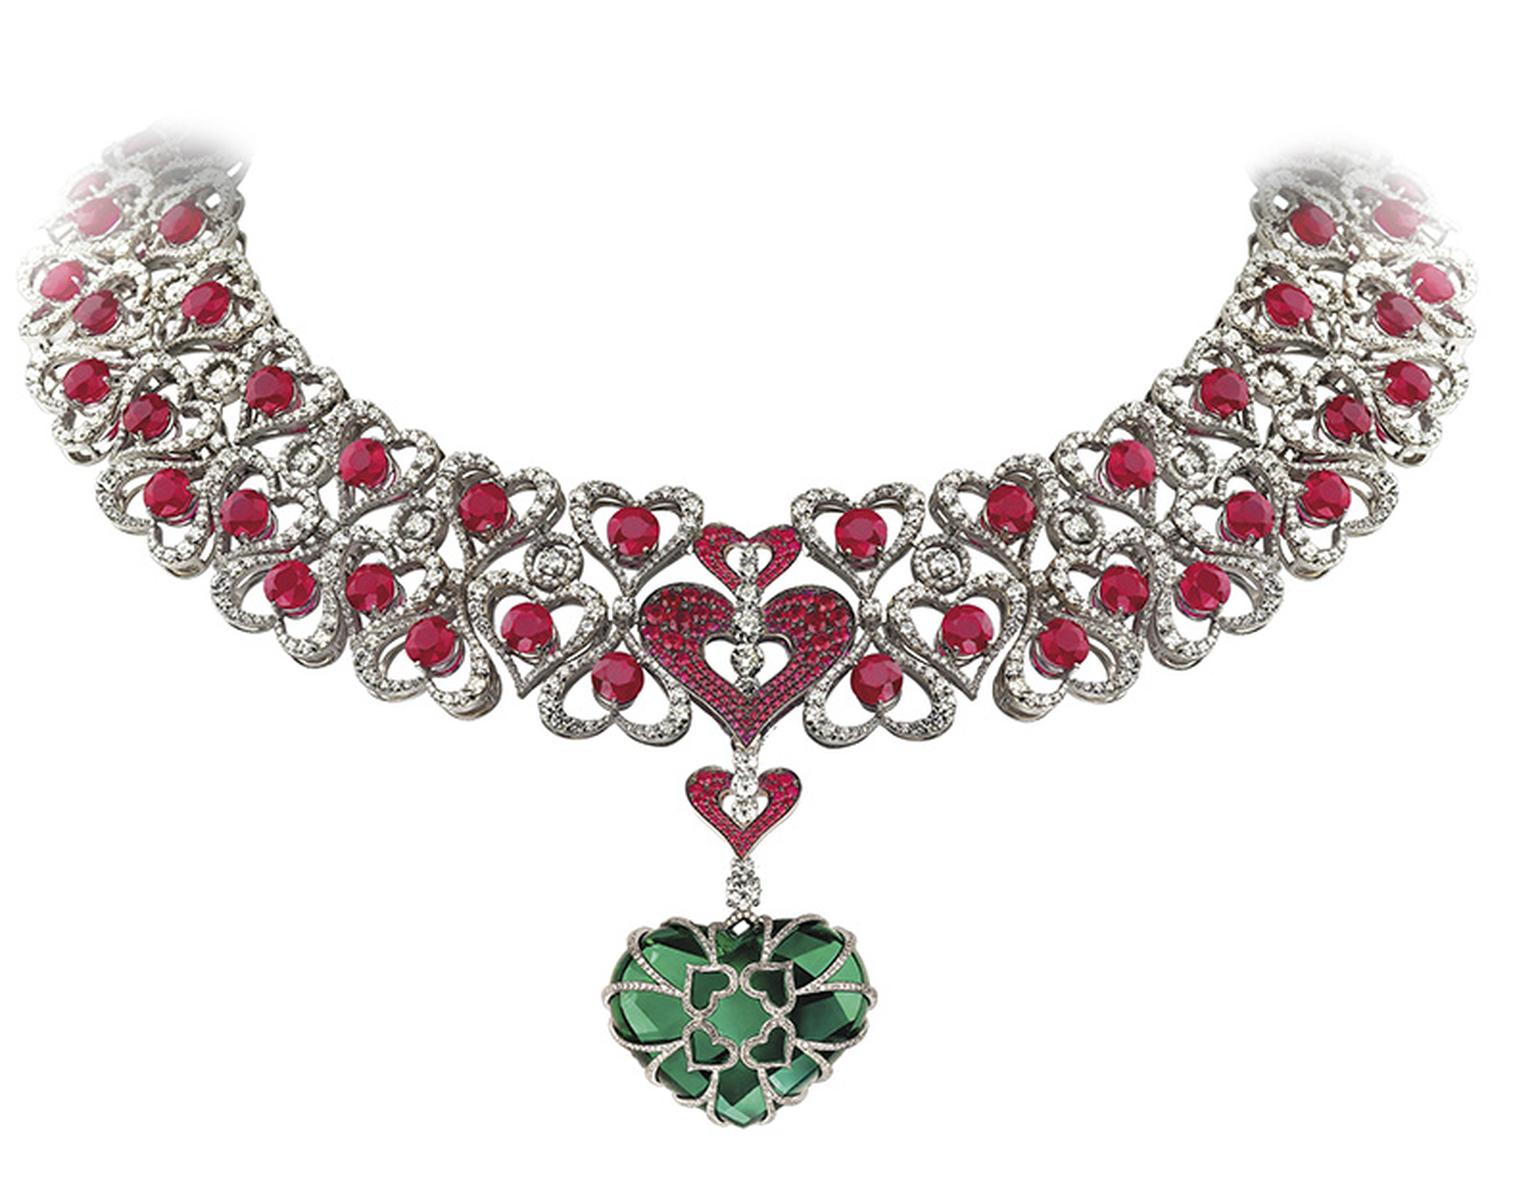 01-AVAKIAN-Heart-Shaped-Columbian-Emerald-Necklace-1